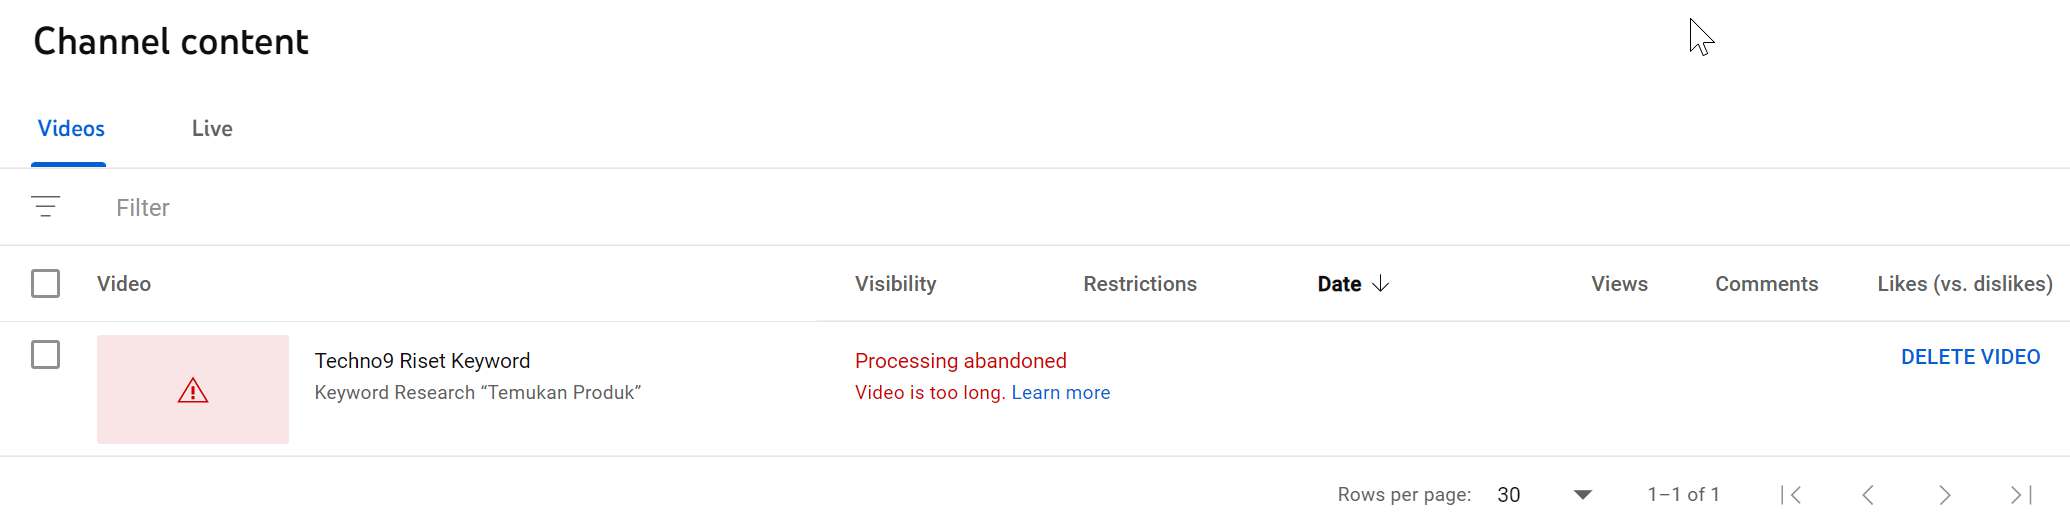 Upload videos longer than 15 minutes